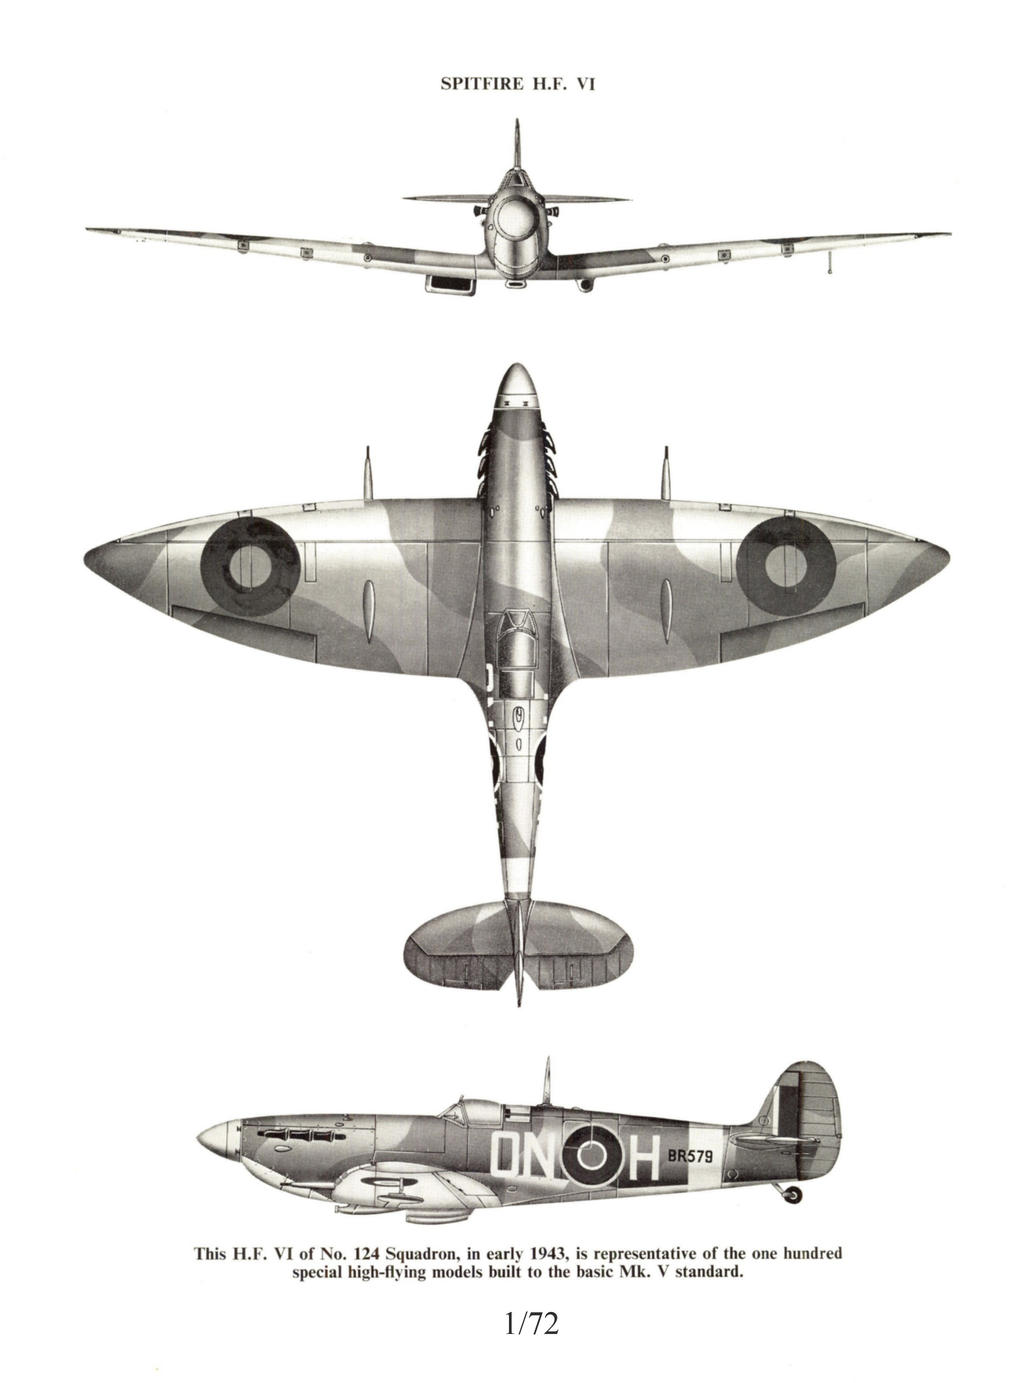 Spitfire HF VI